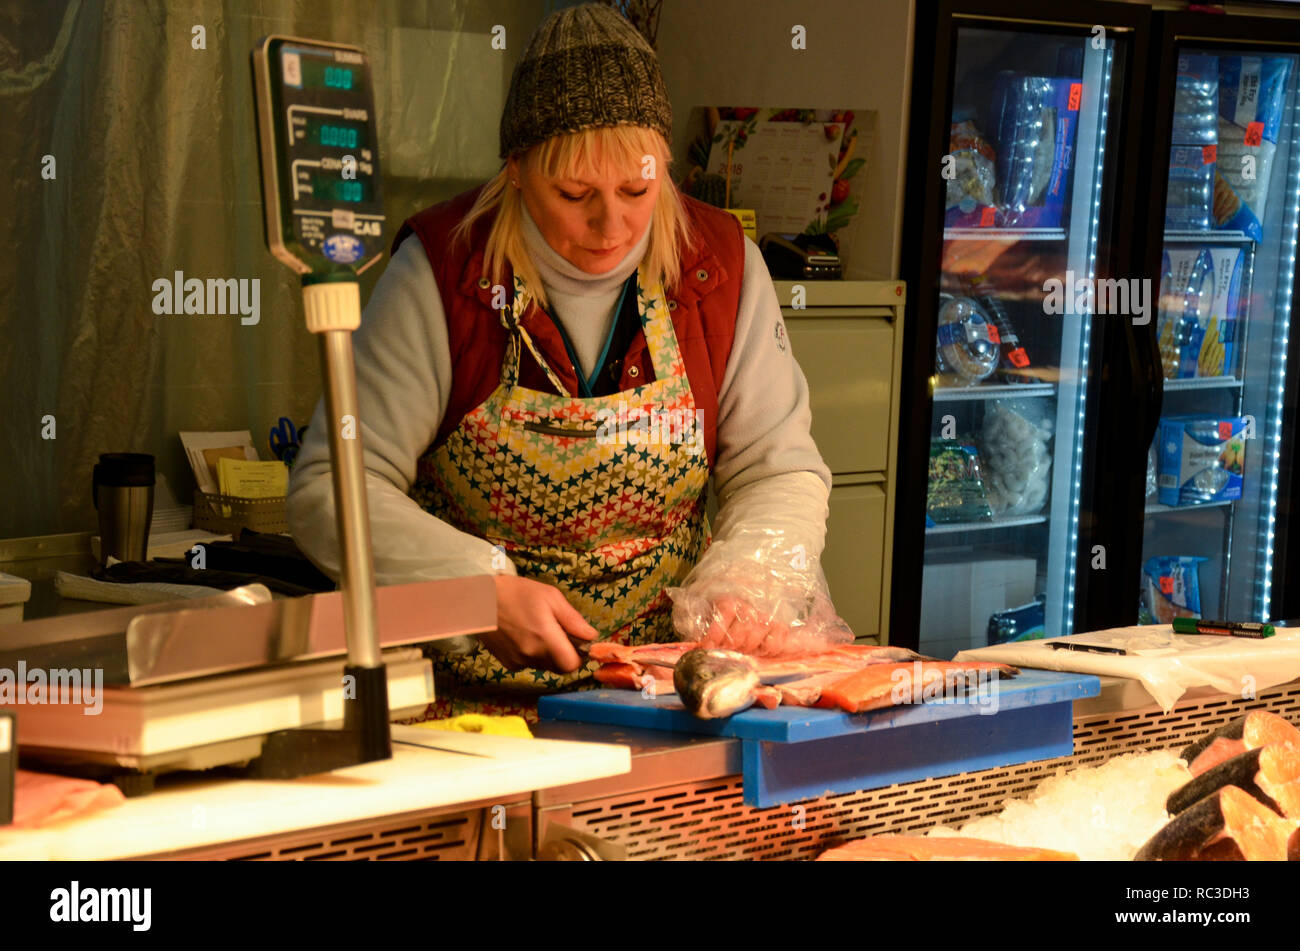 A fishmonger serves a customer, Riga Central Market, Europe's largest market and bazaar, Riga, Republic of Latvia, Baltics, December 2018 Stock Photo